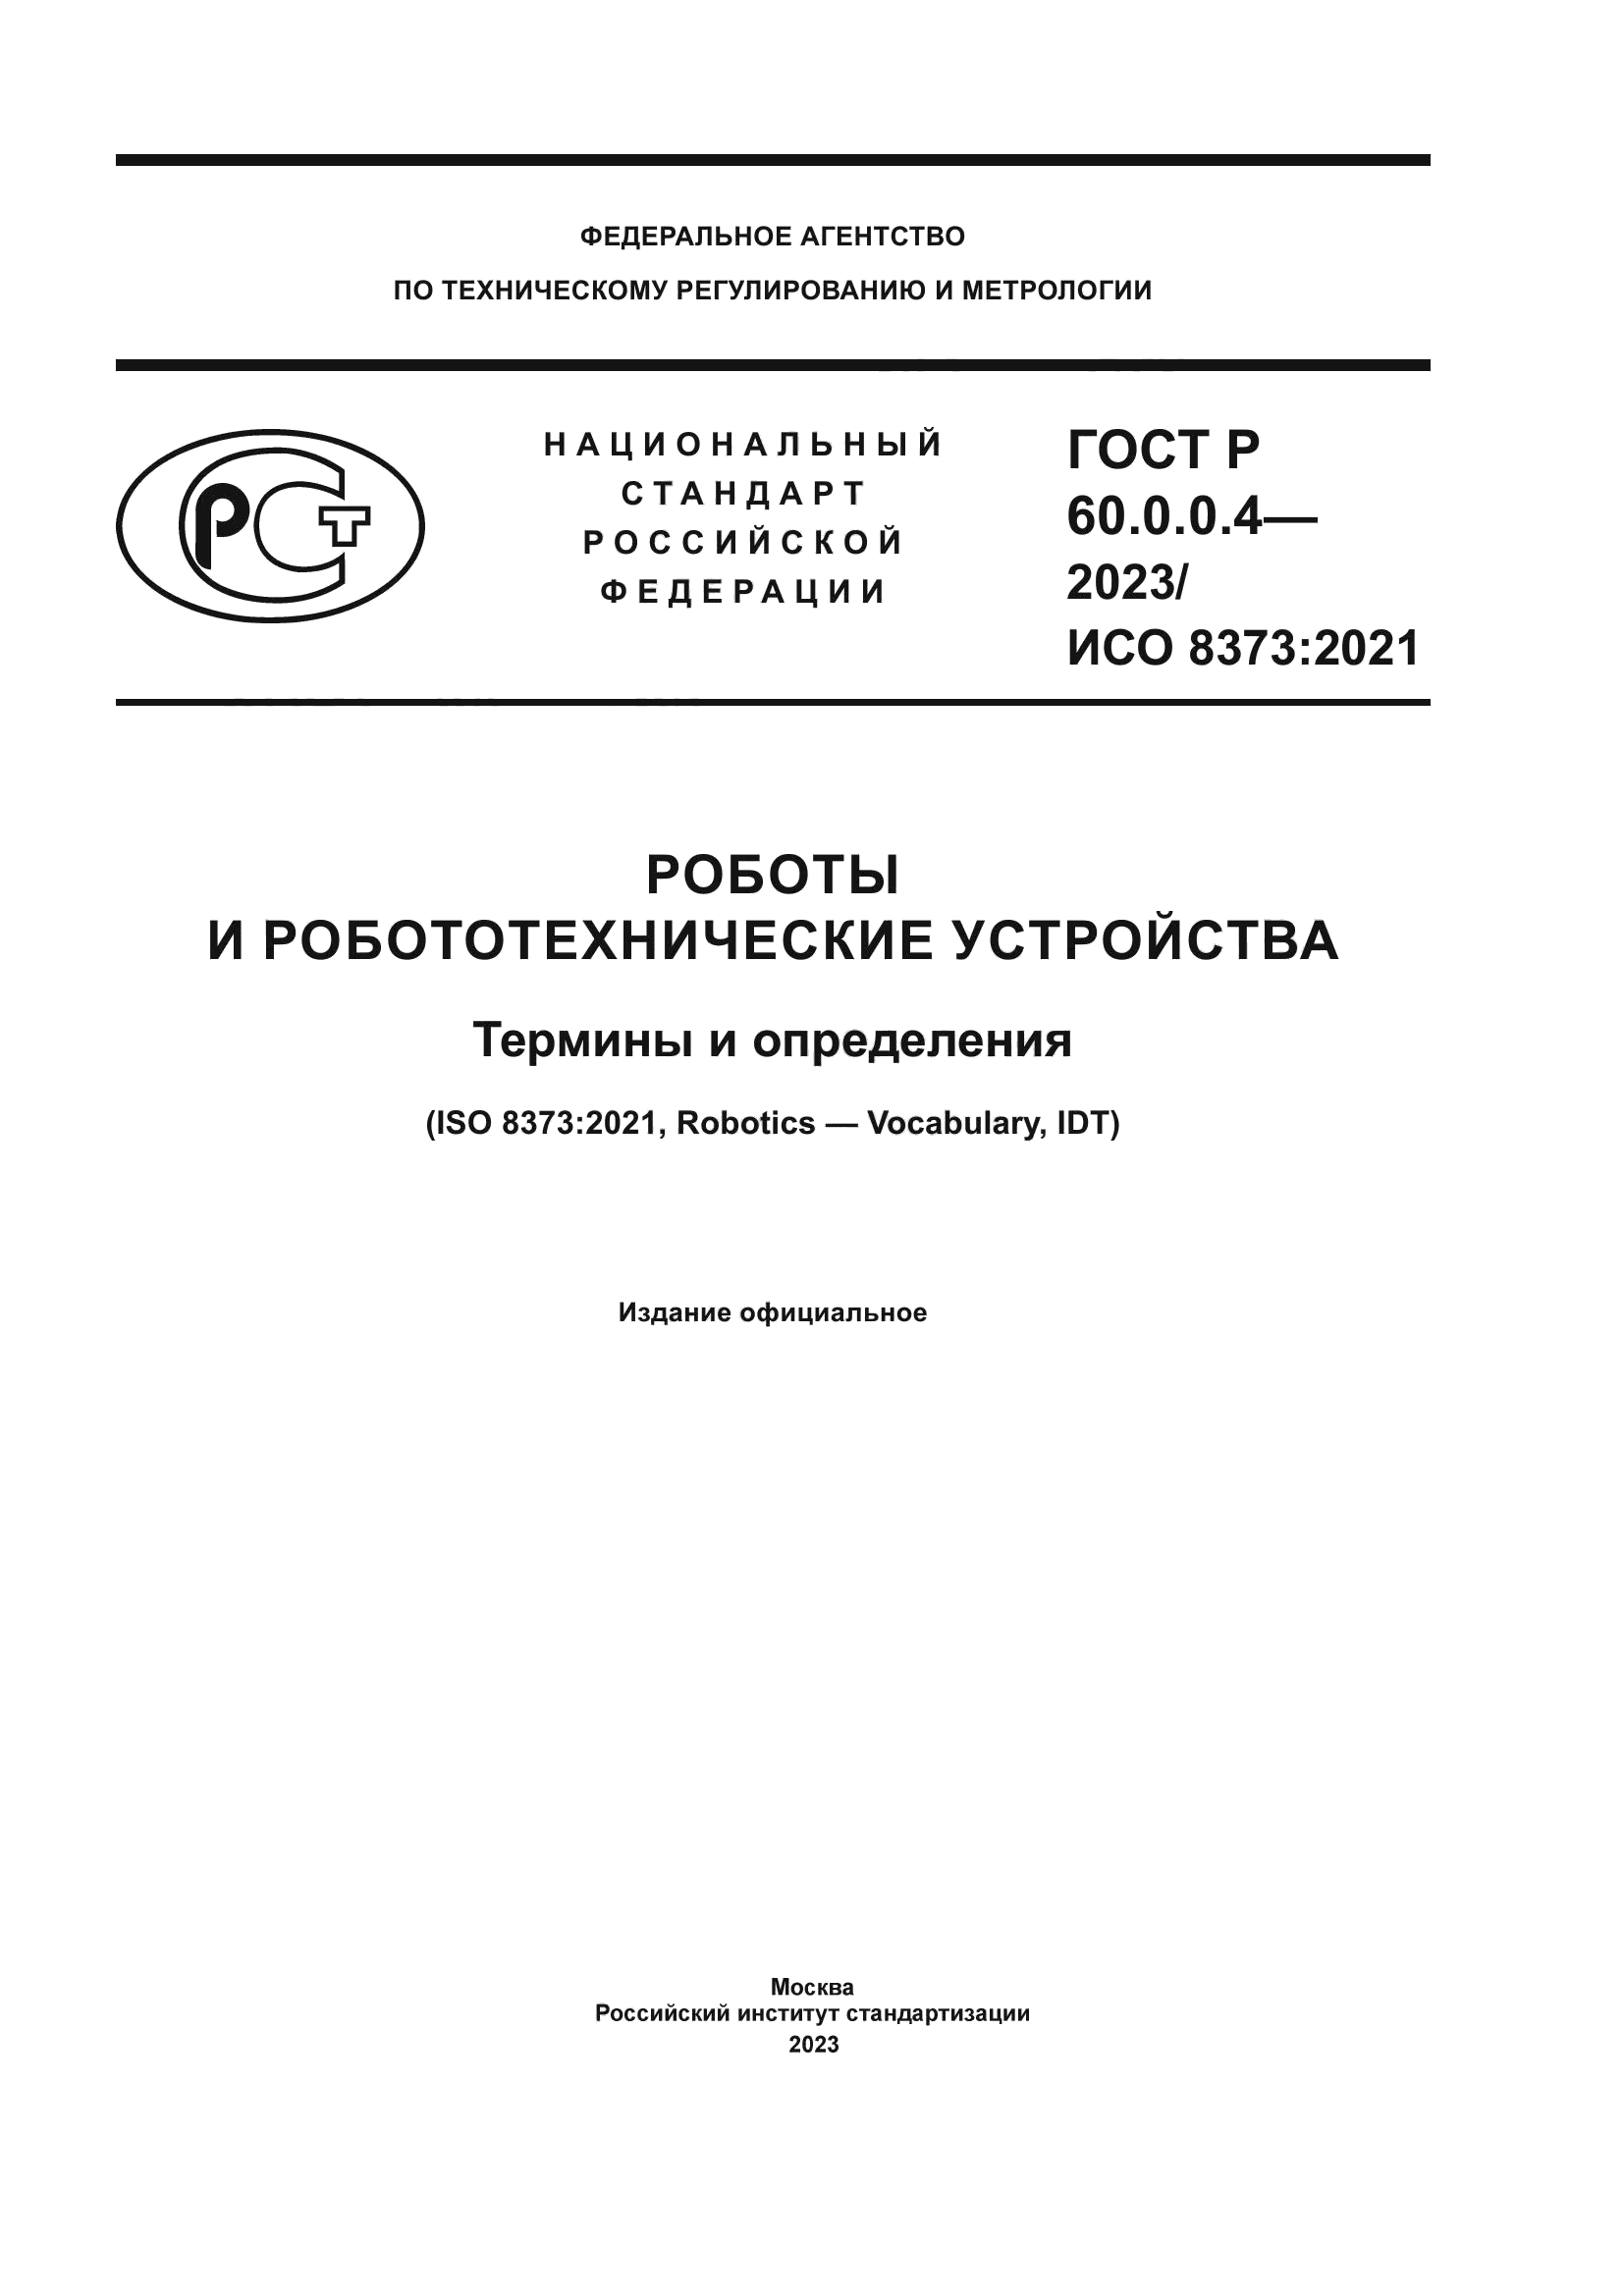 ГОСТ Р 60.0.0.4-2023